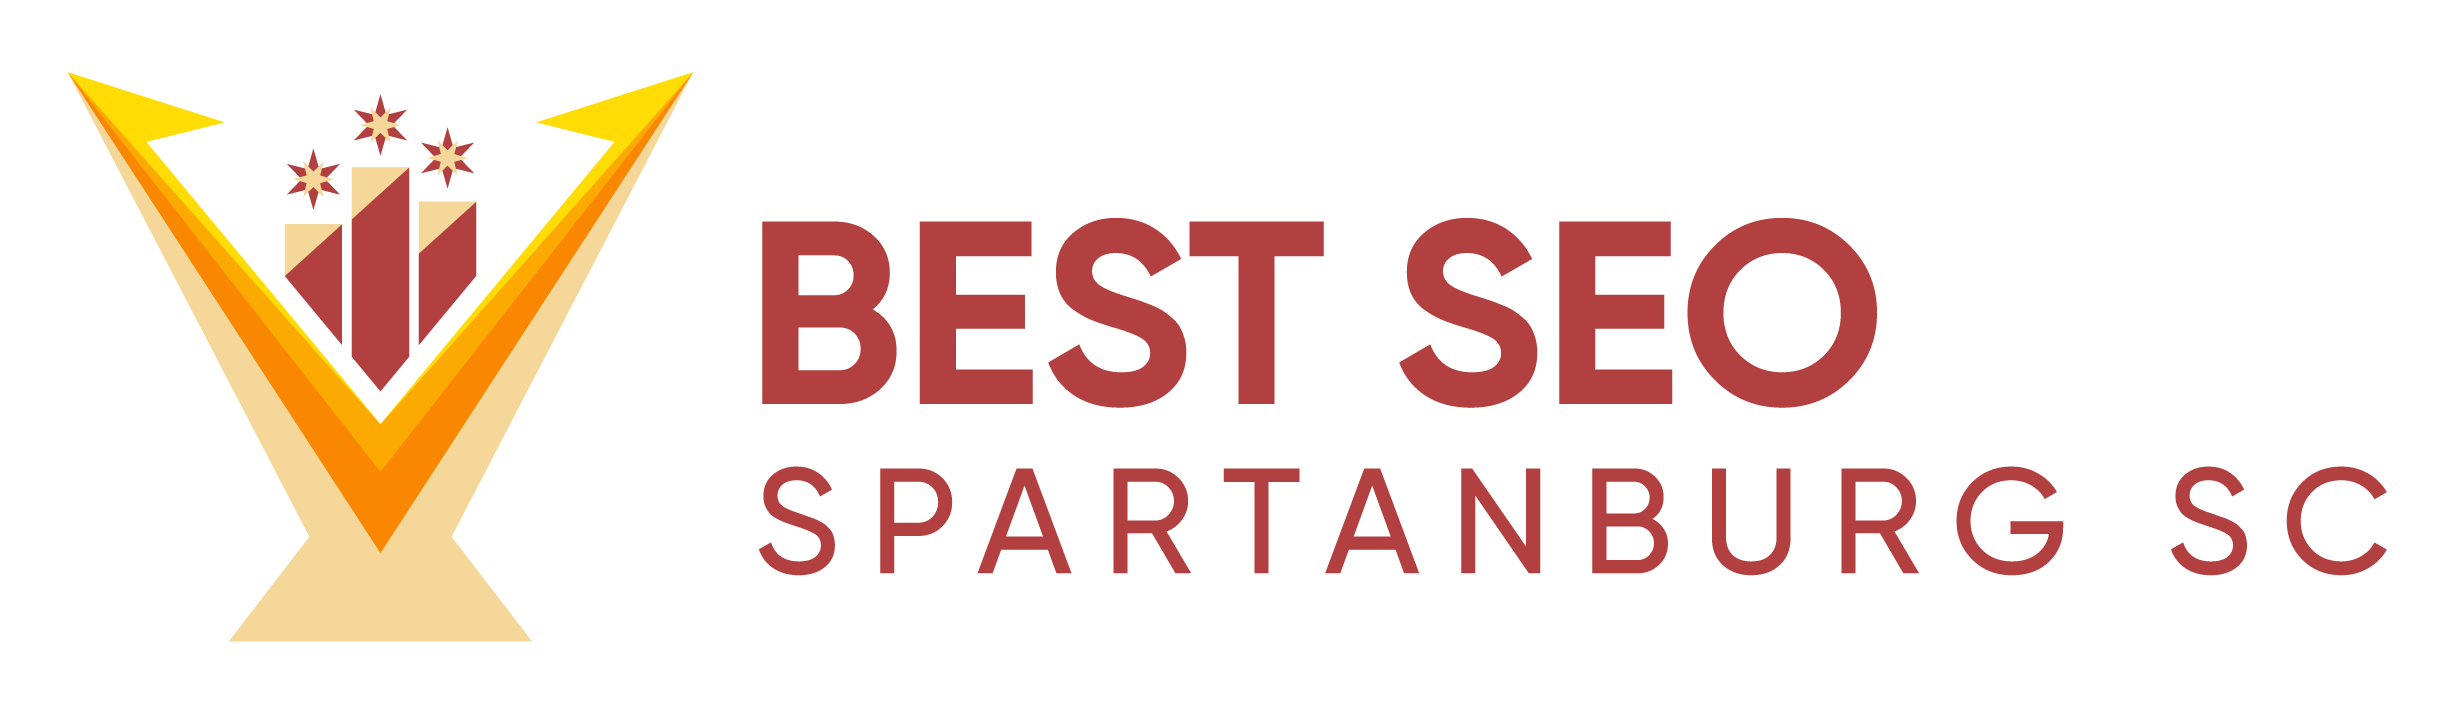 Best SEO Spartanburg SC Logo